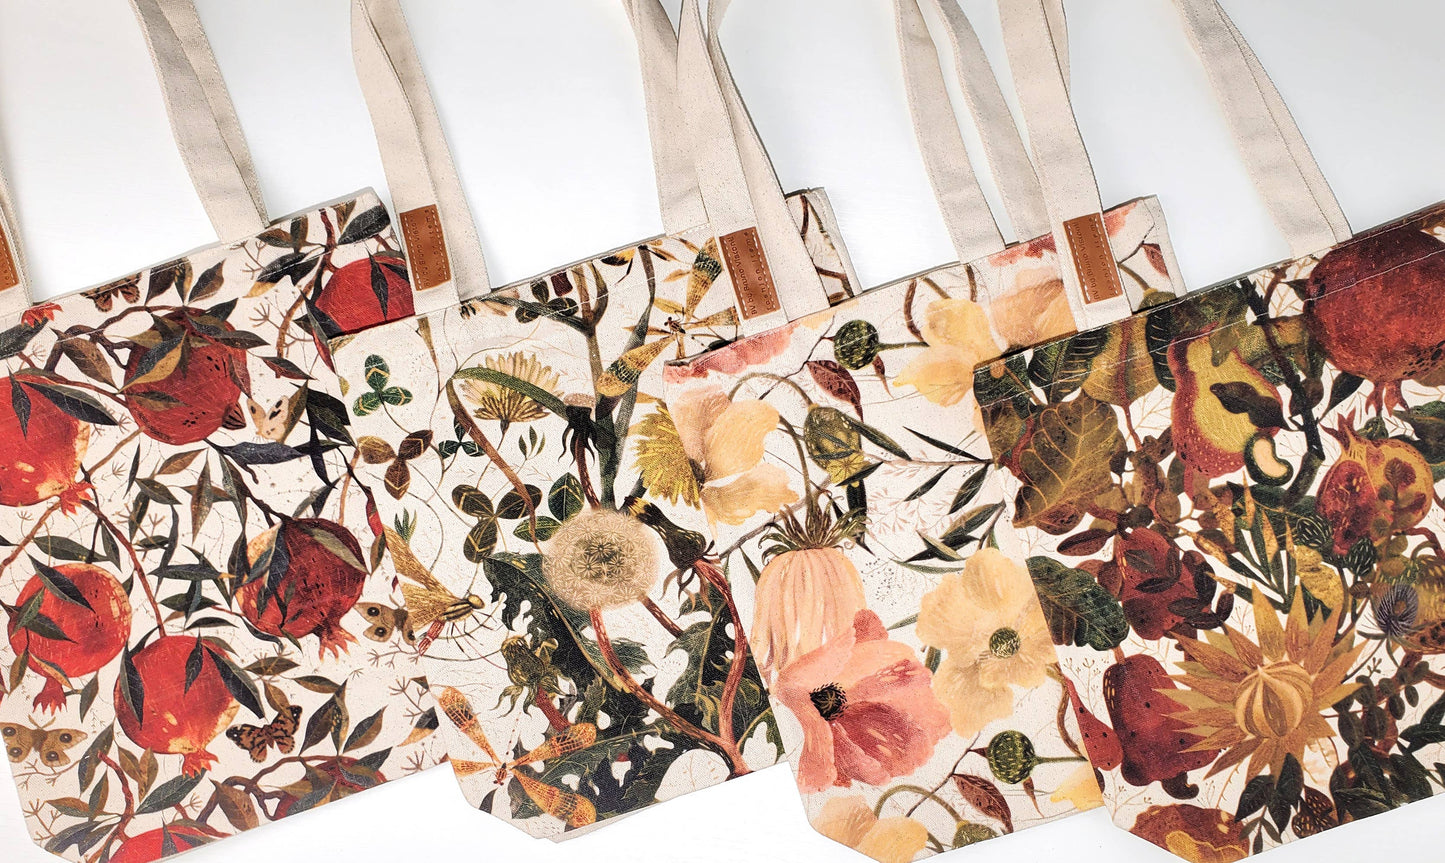 BV by Bruno Visconti - Canvas Shopper Bag Greens & Flowers Tote